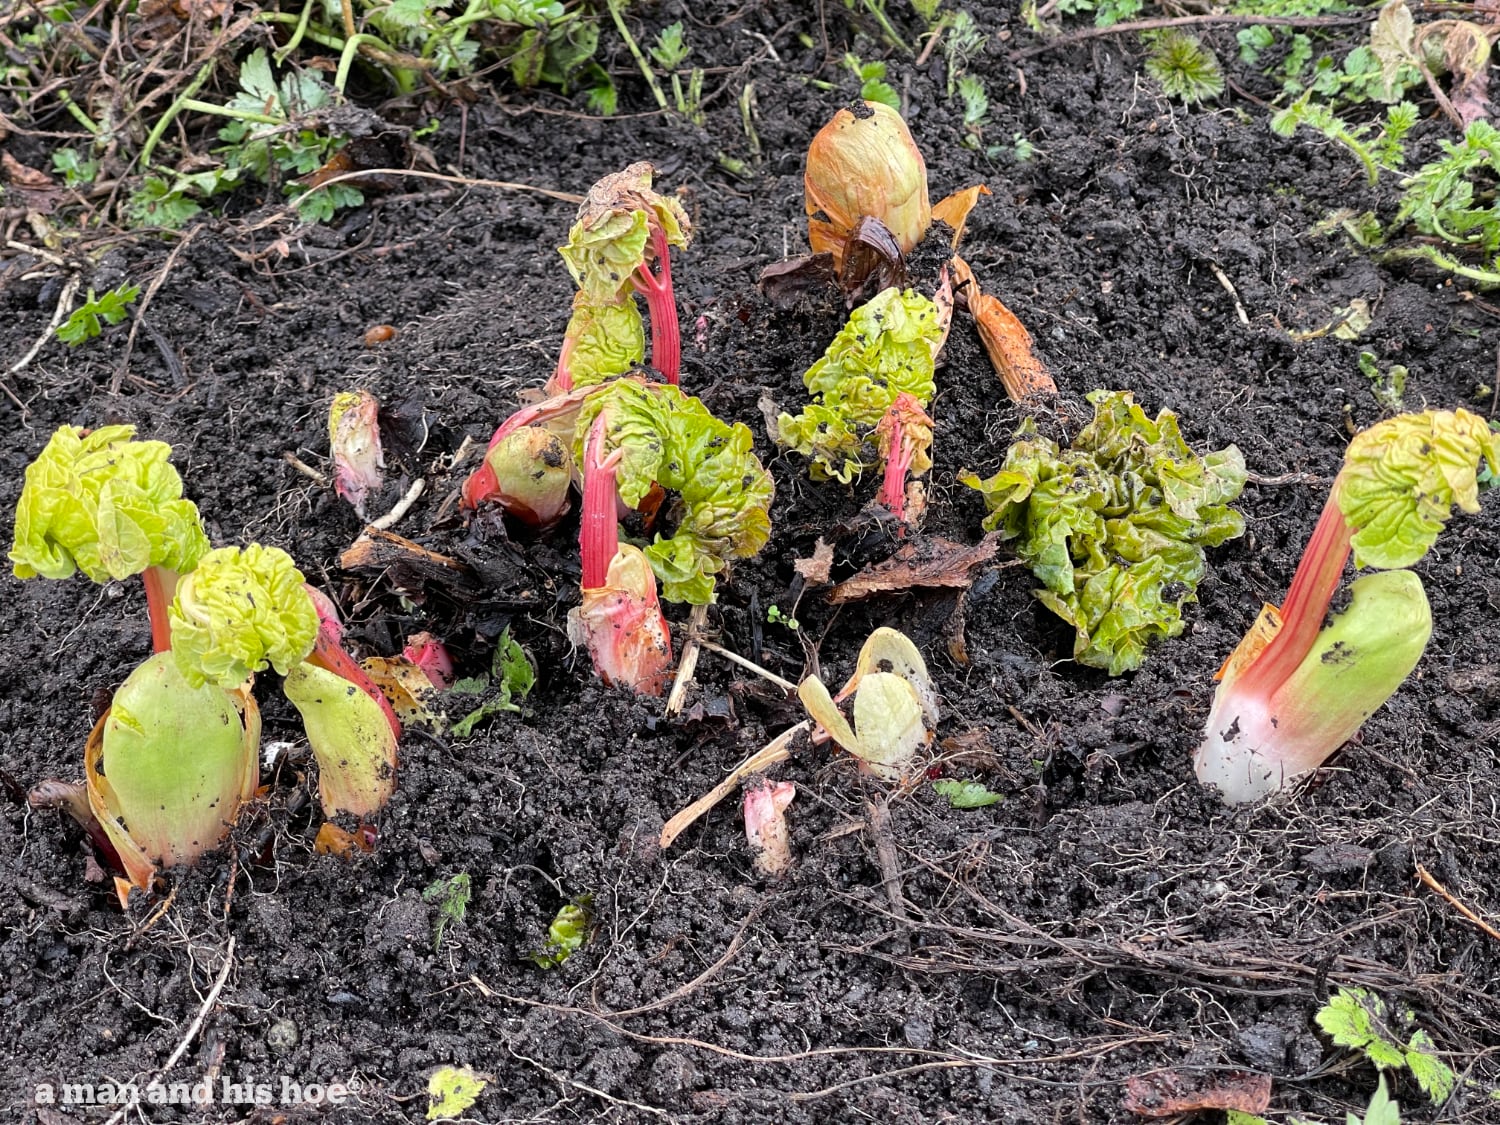 Rhubarb shoots prove spring has sprung